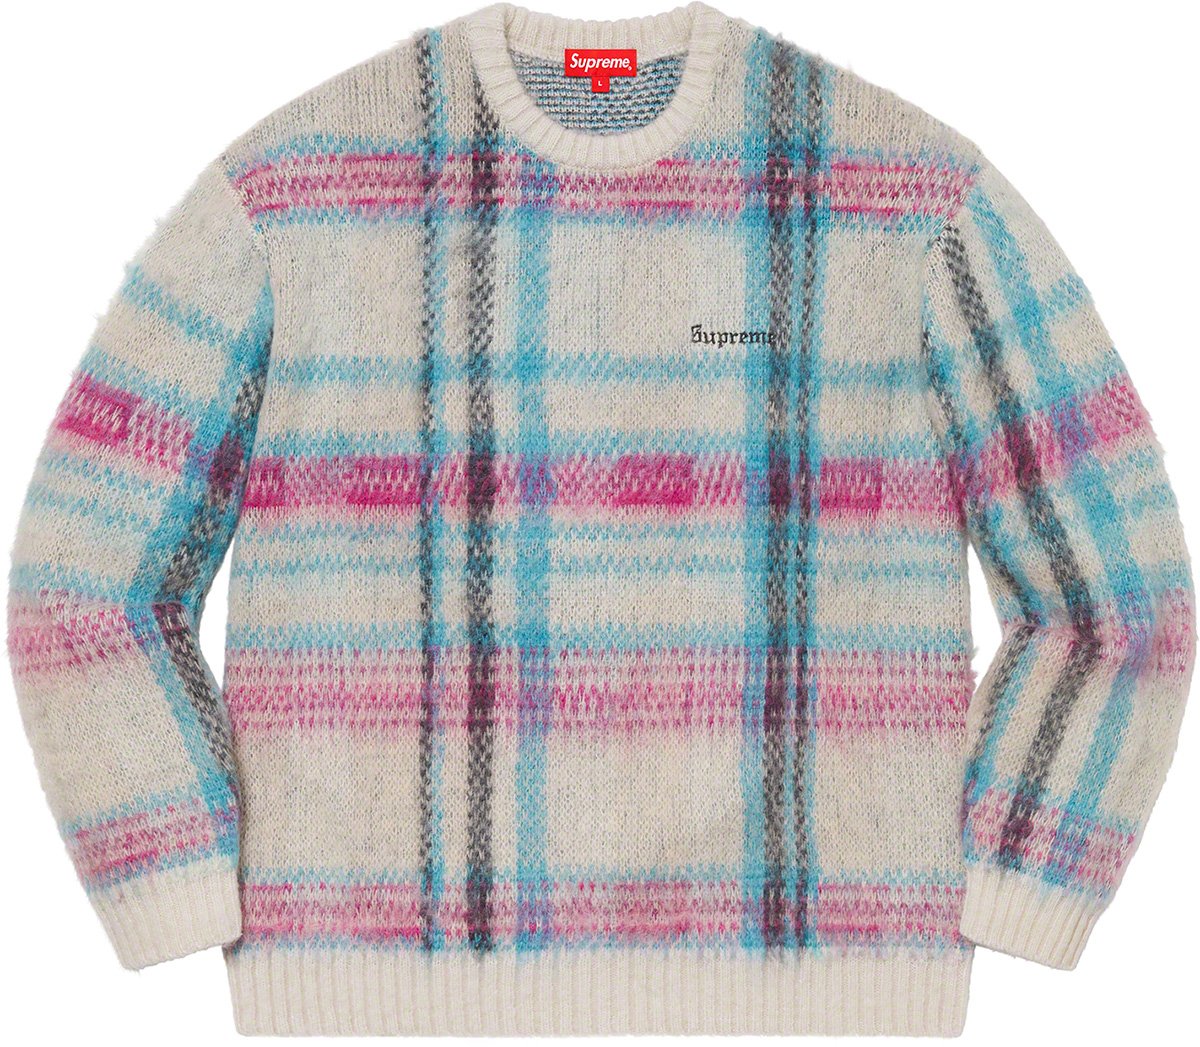 Brushed Plaid Sweater - Supreme Community